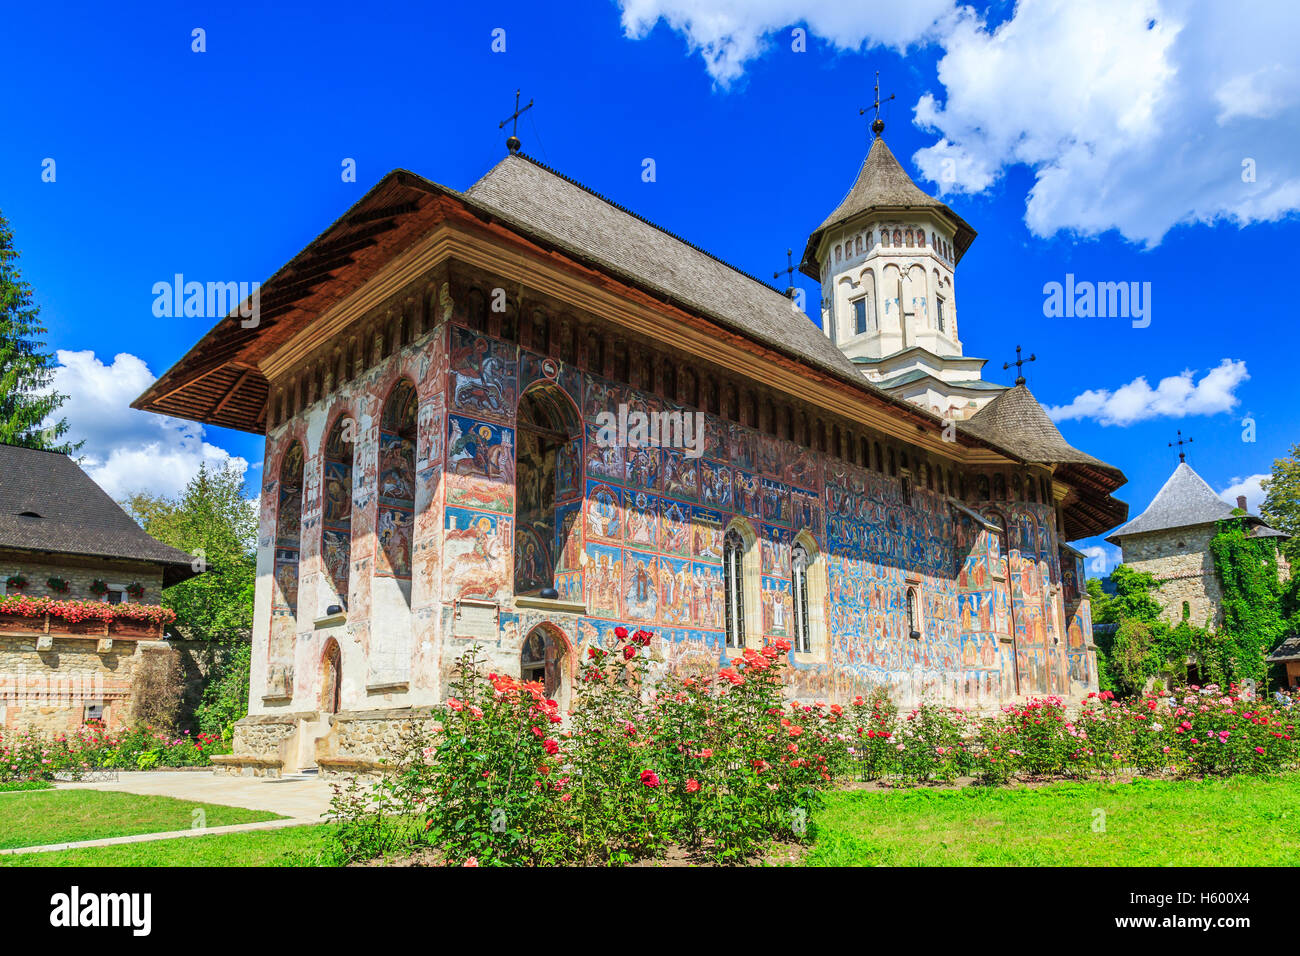 The Moldovita Monastery, Romania. Stock Photo